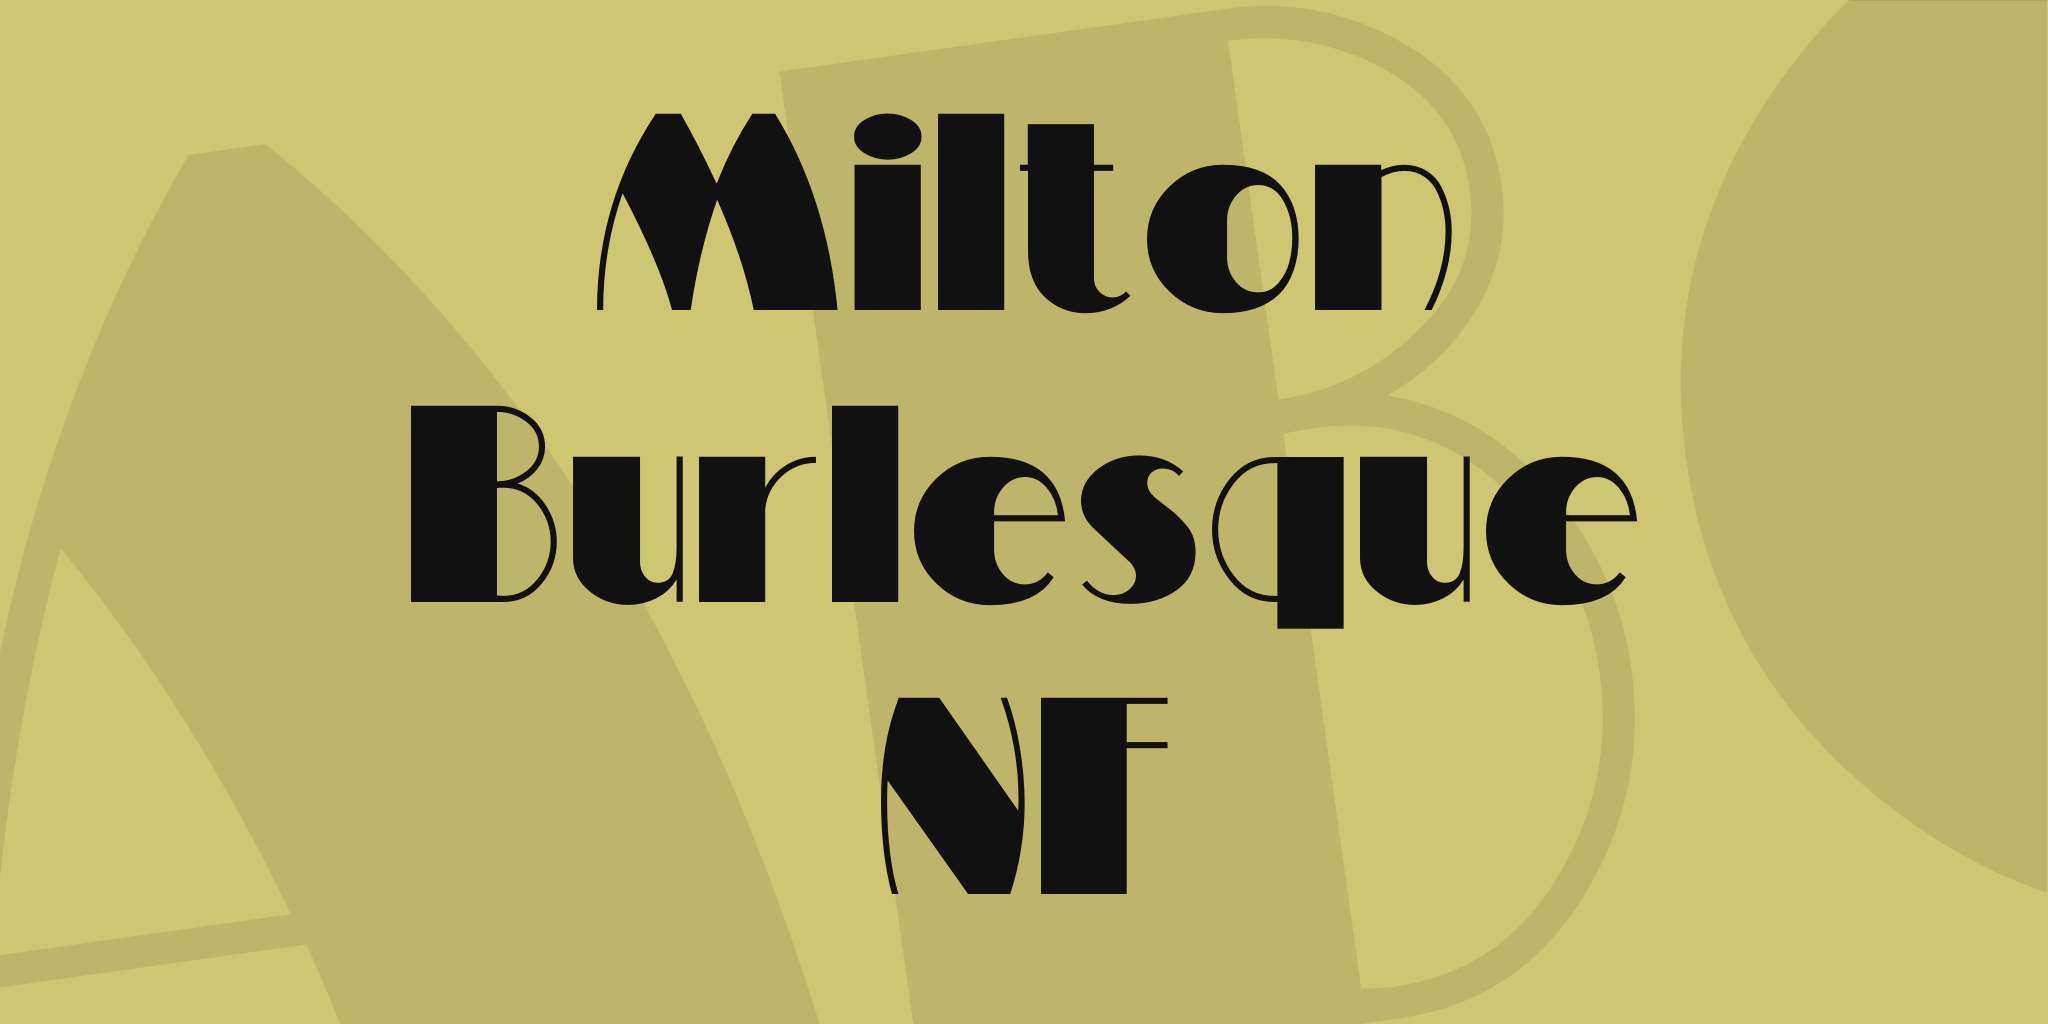 Milton Burlesque Nf